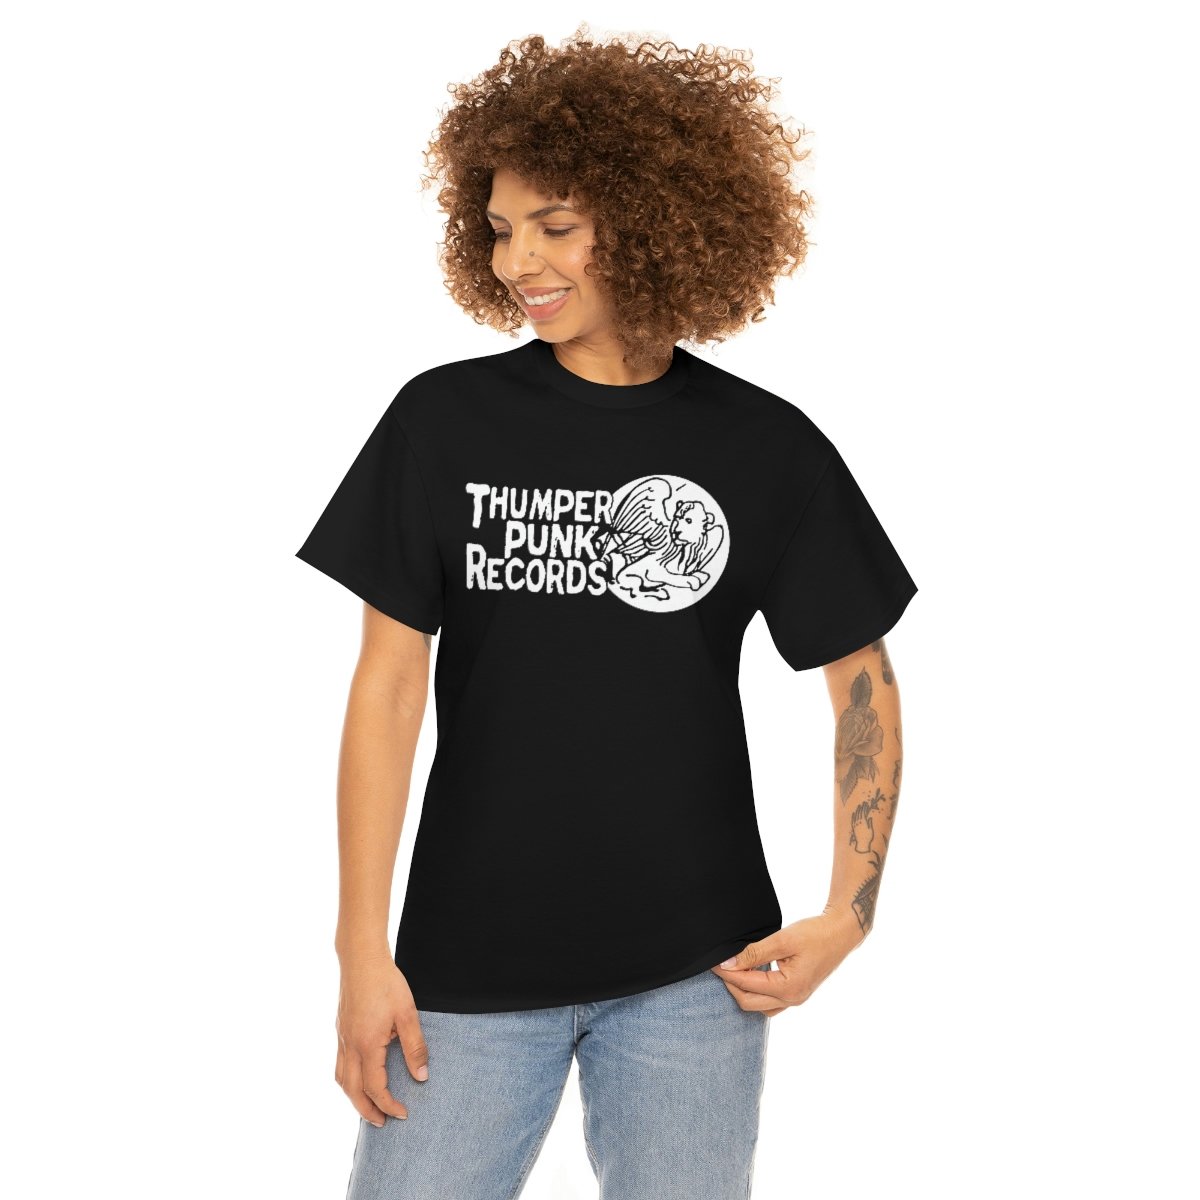 Thumper Punk Records Short Sleeve Tshirt